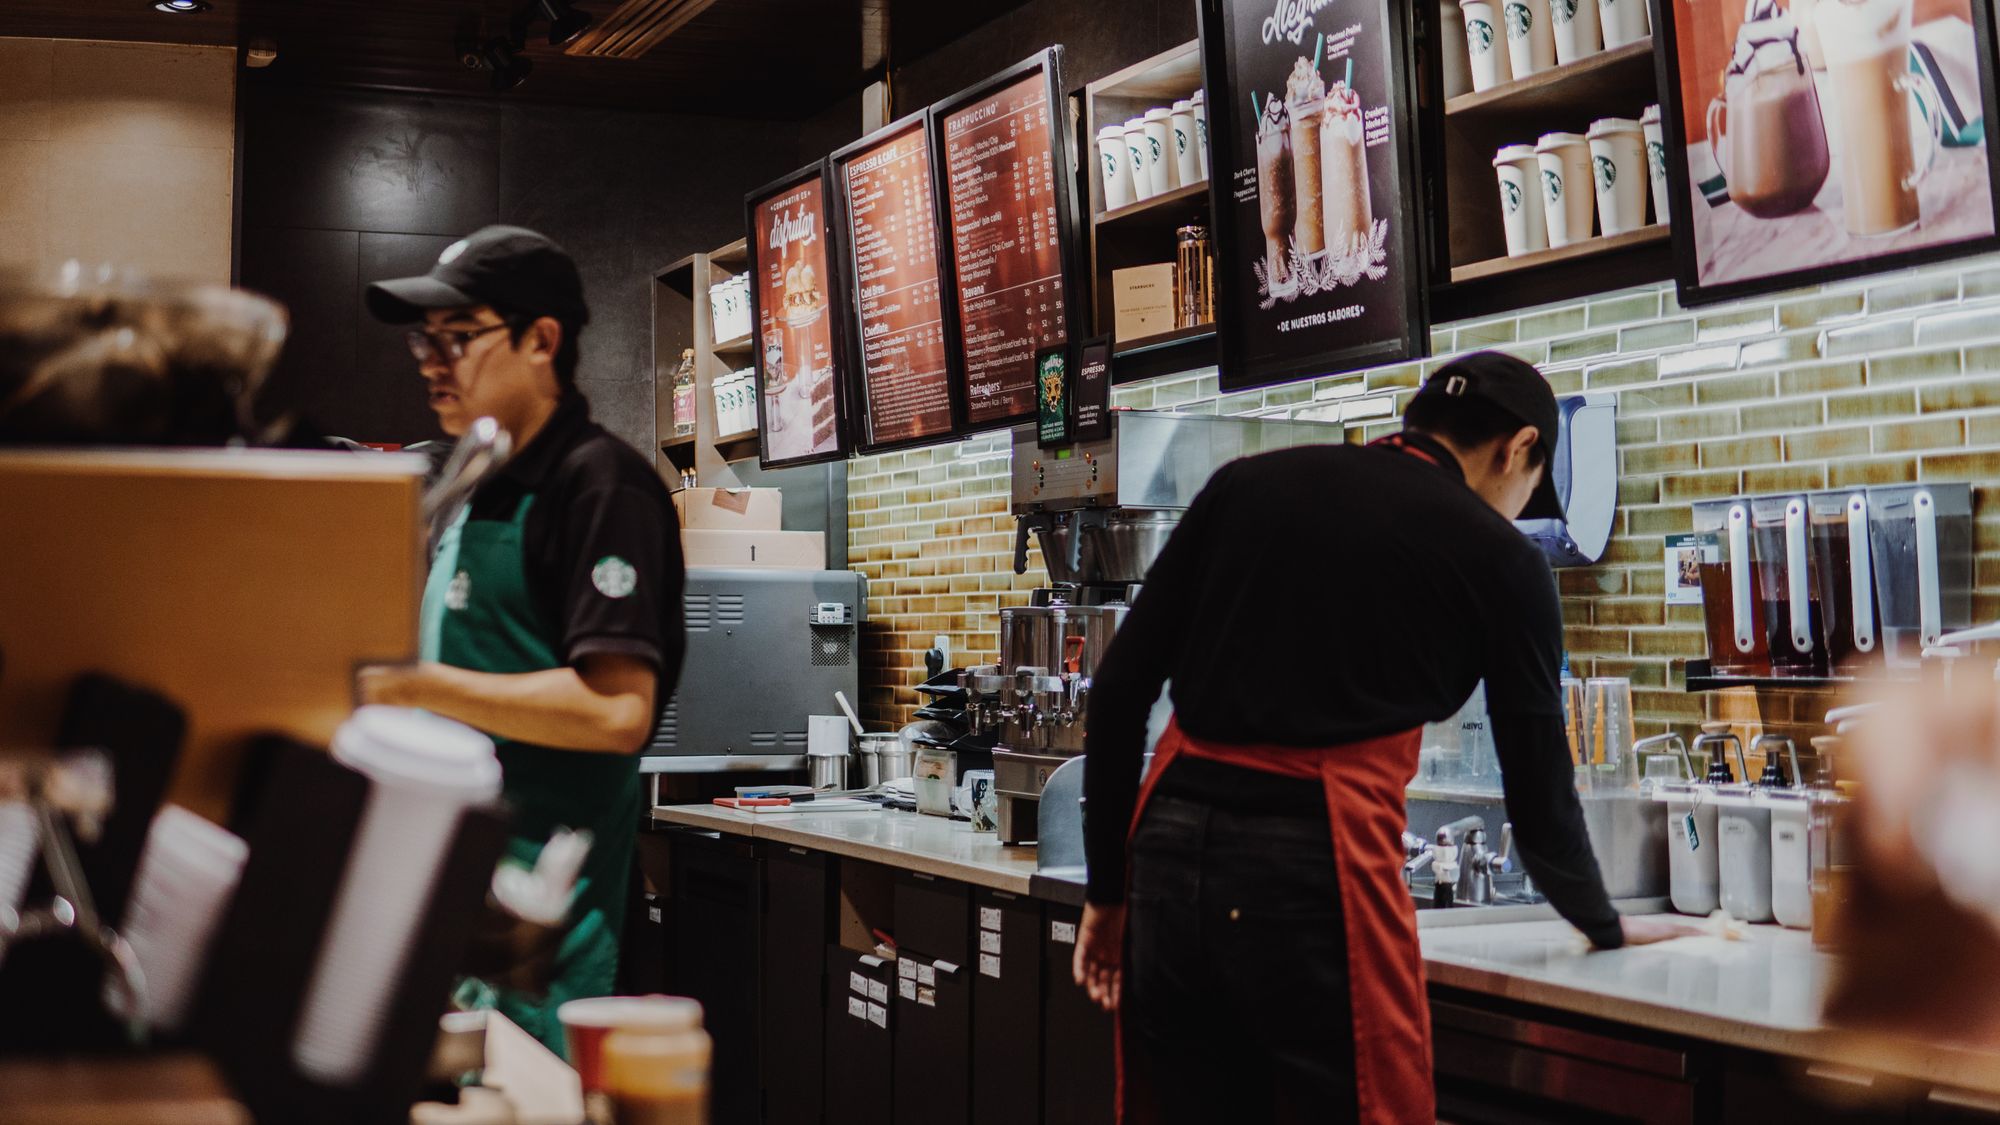 Starbucks' head of transformation Frank Britt weighs in on state of Frontline Work